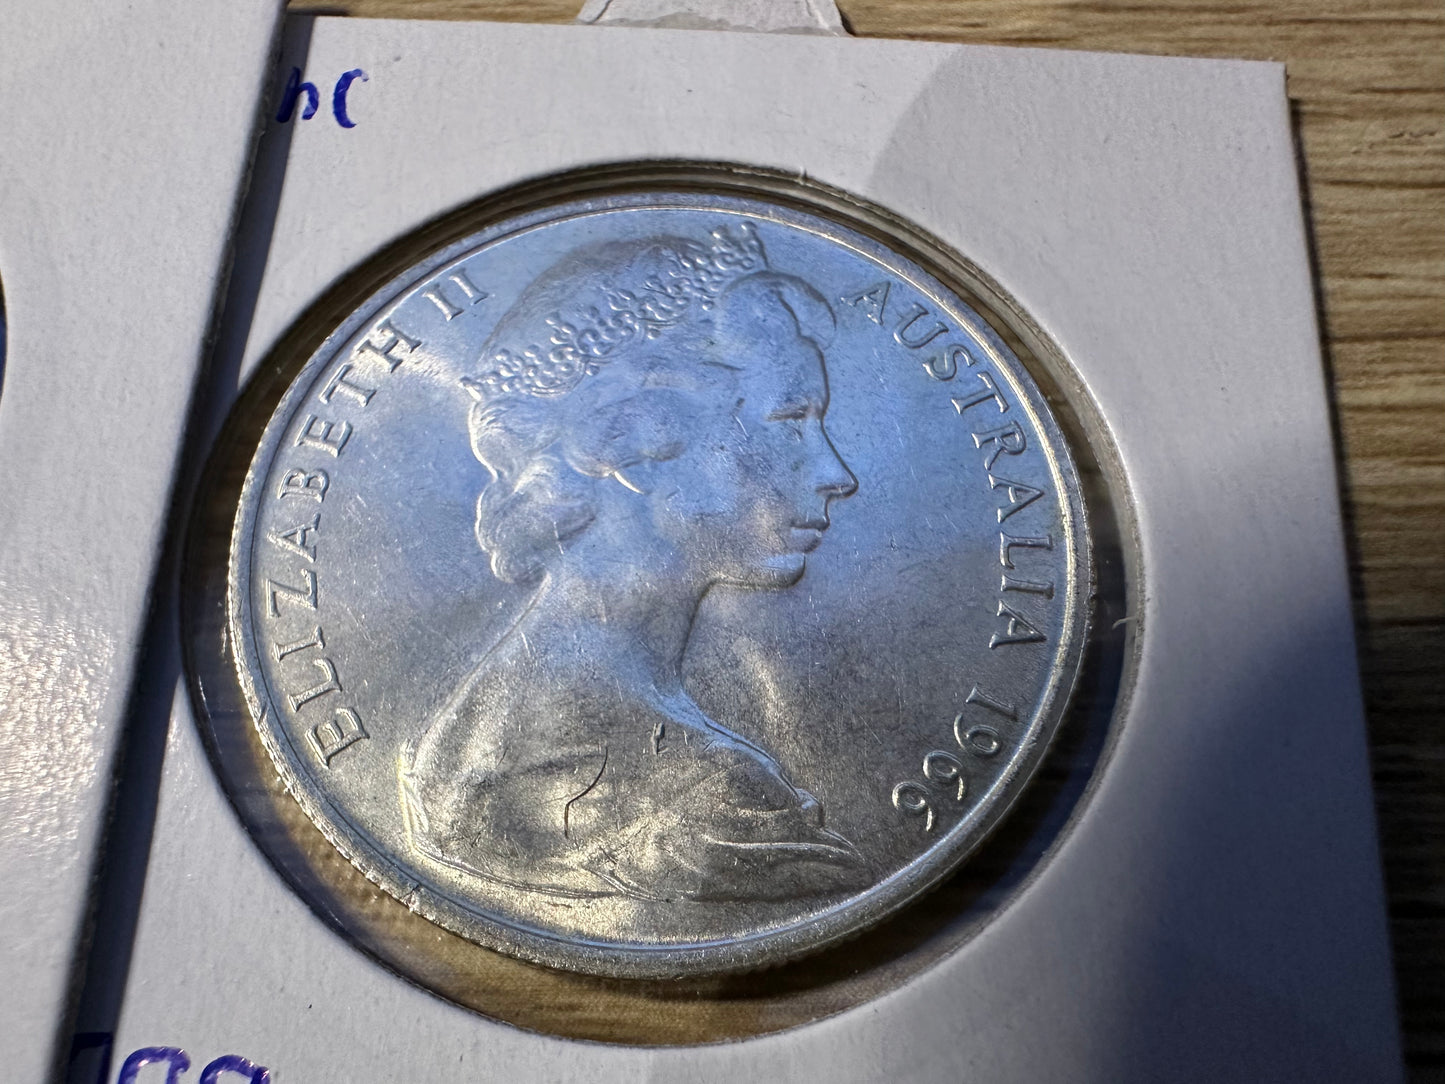 1966 AUnc Round 50 cent coin - .800 Silver